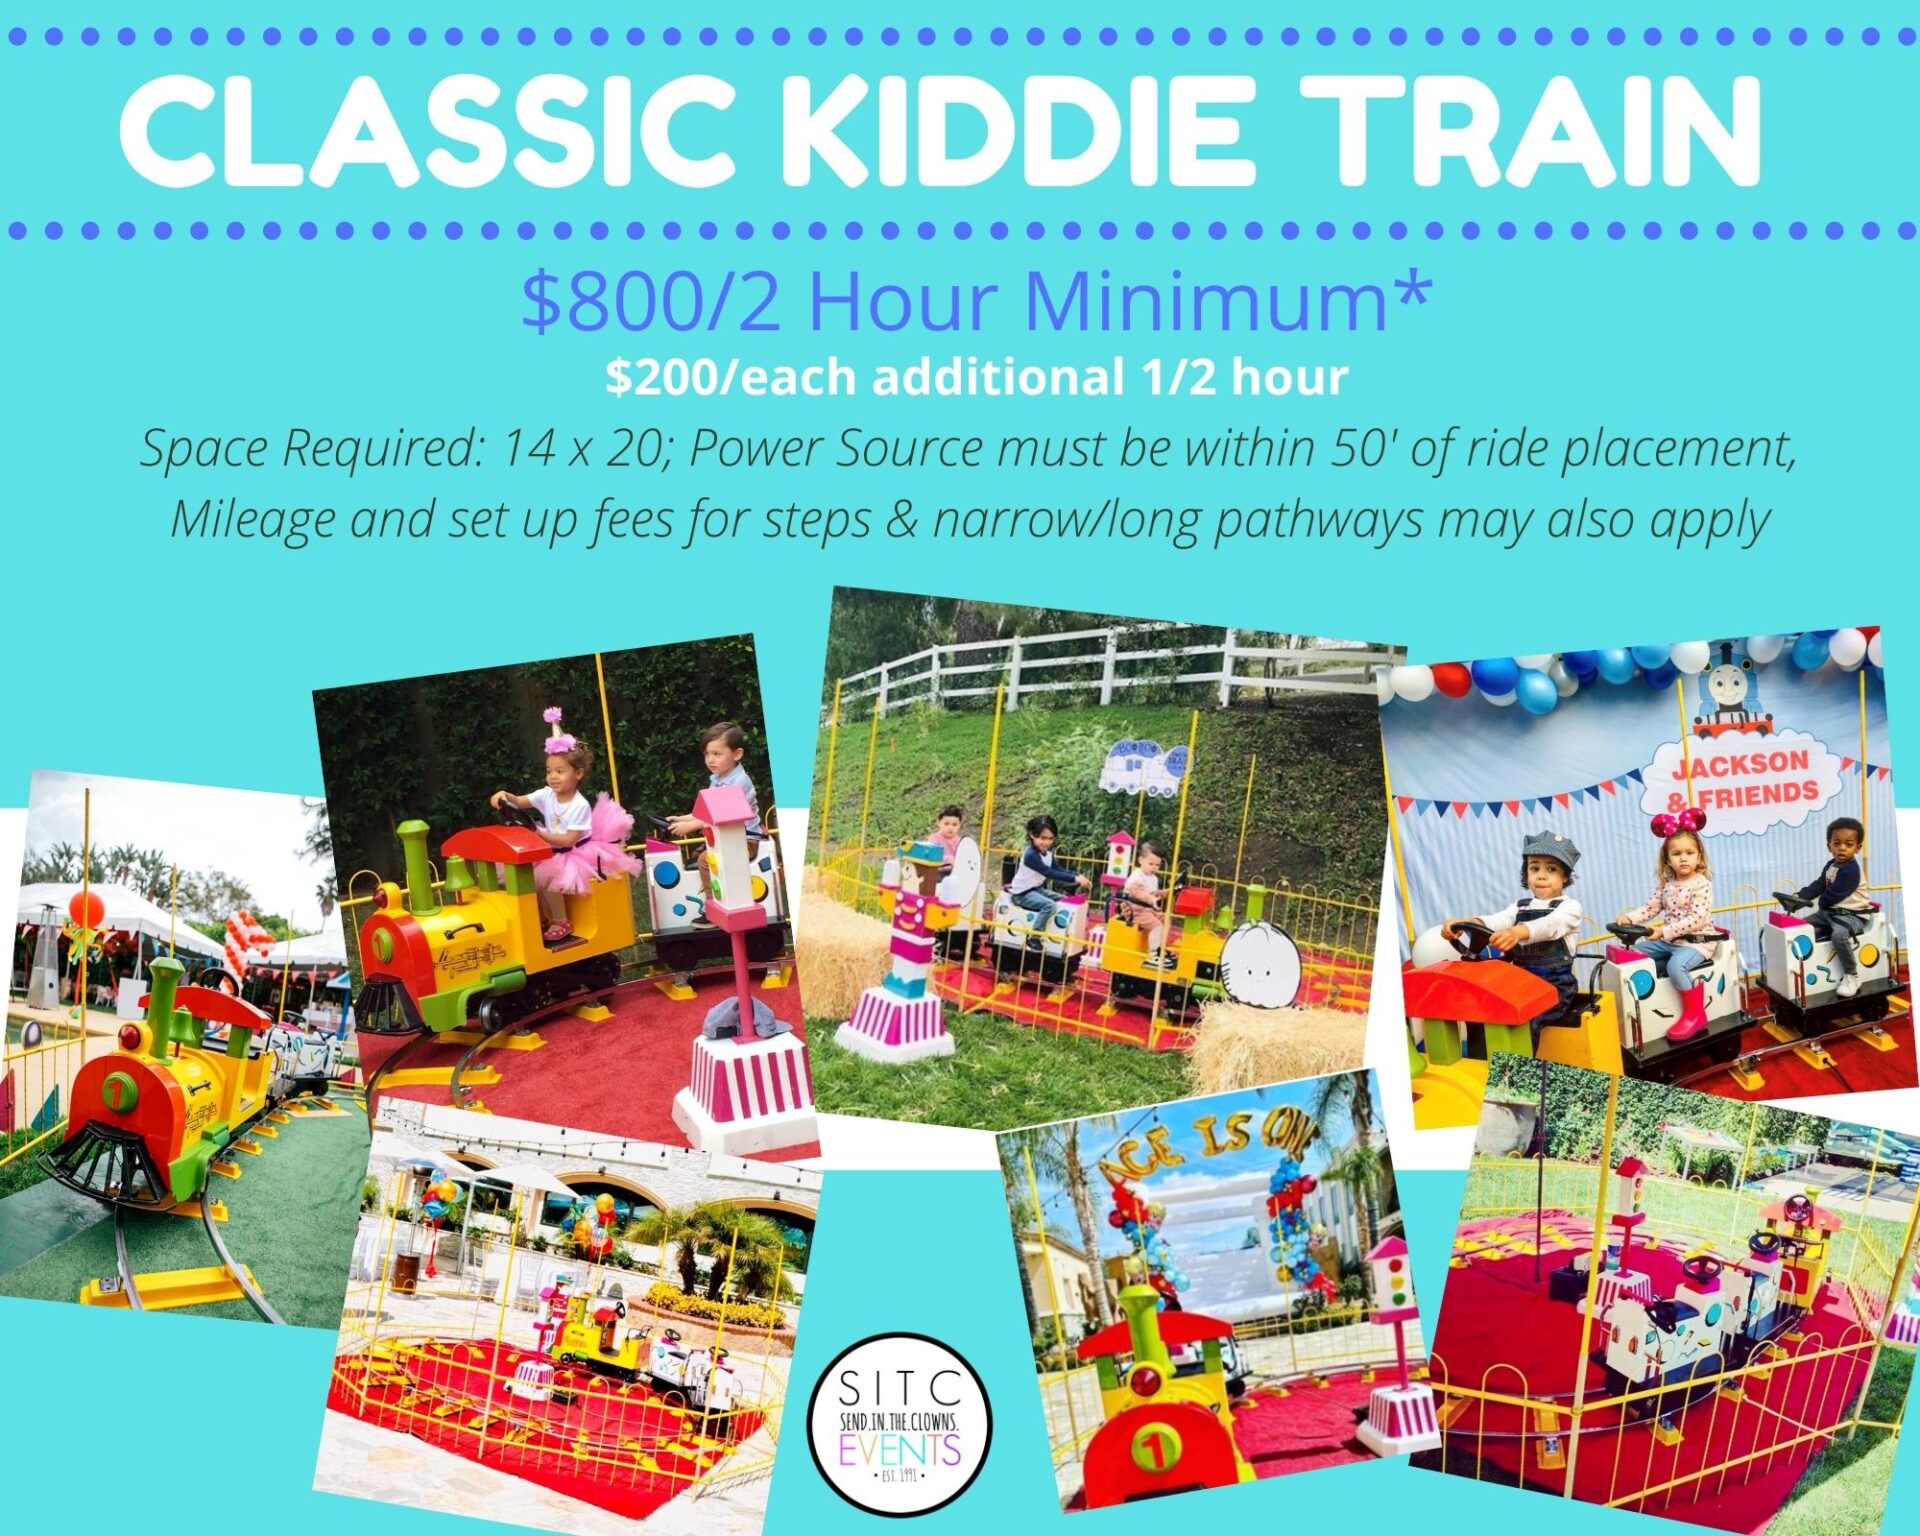 Classic Kiddie Train